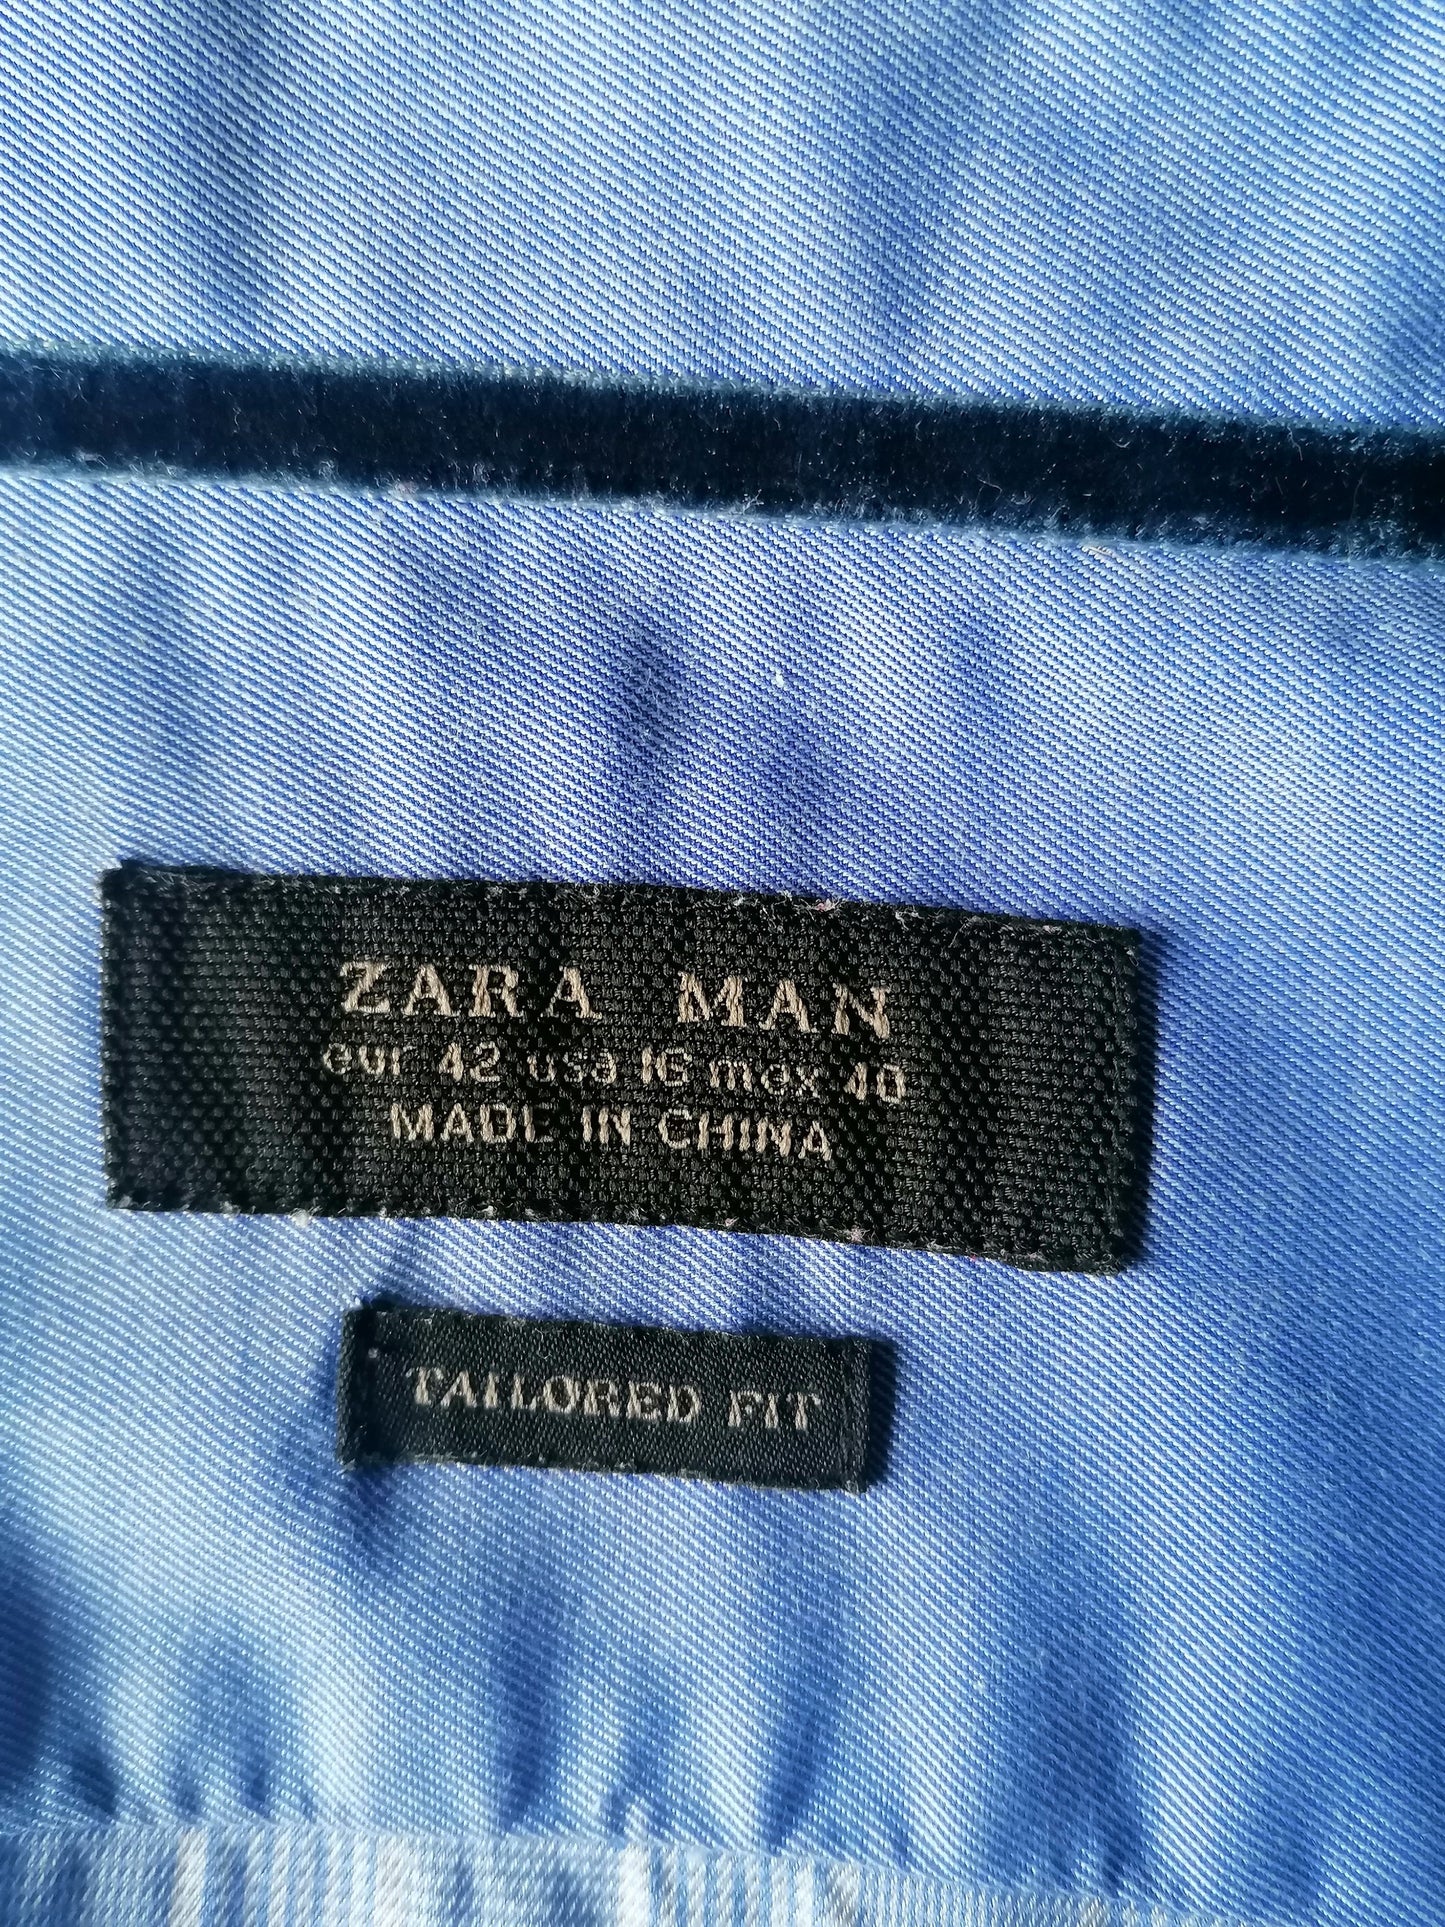 Zara man shirt. Blue white checkered. Size 42 / L. Tailored fit.